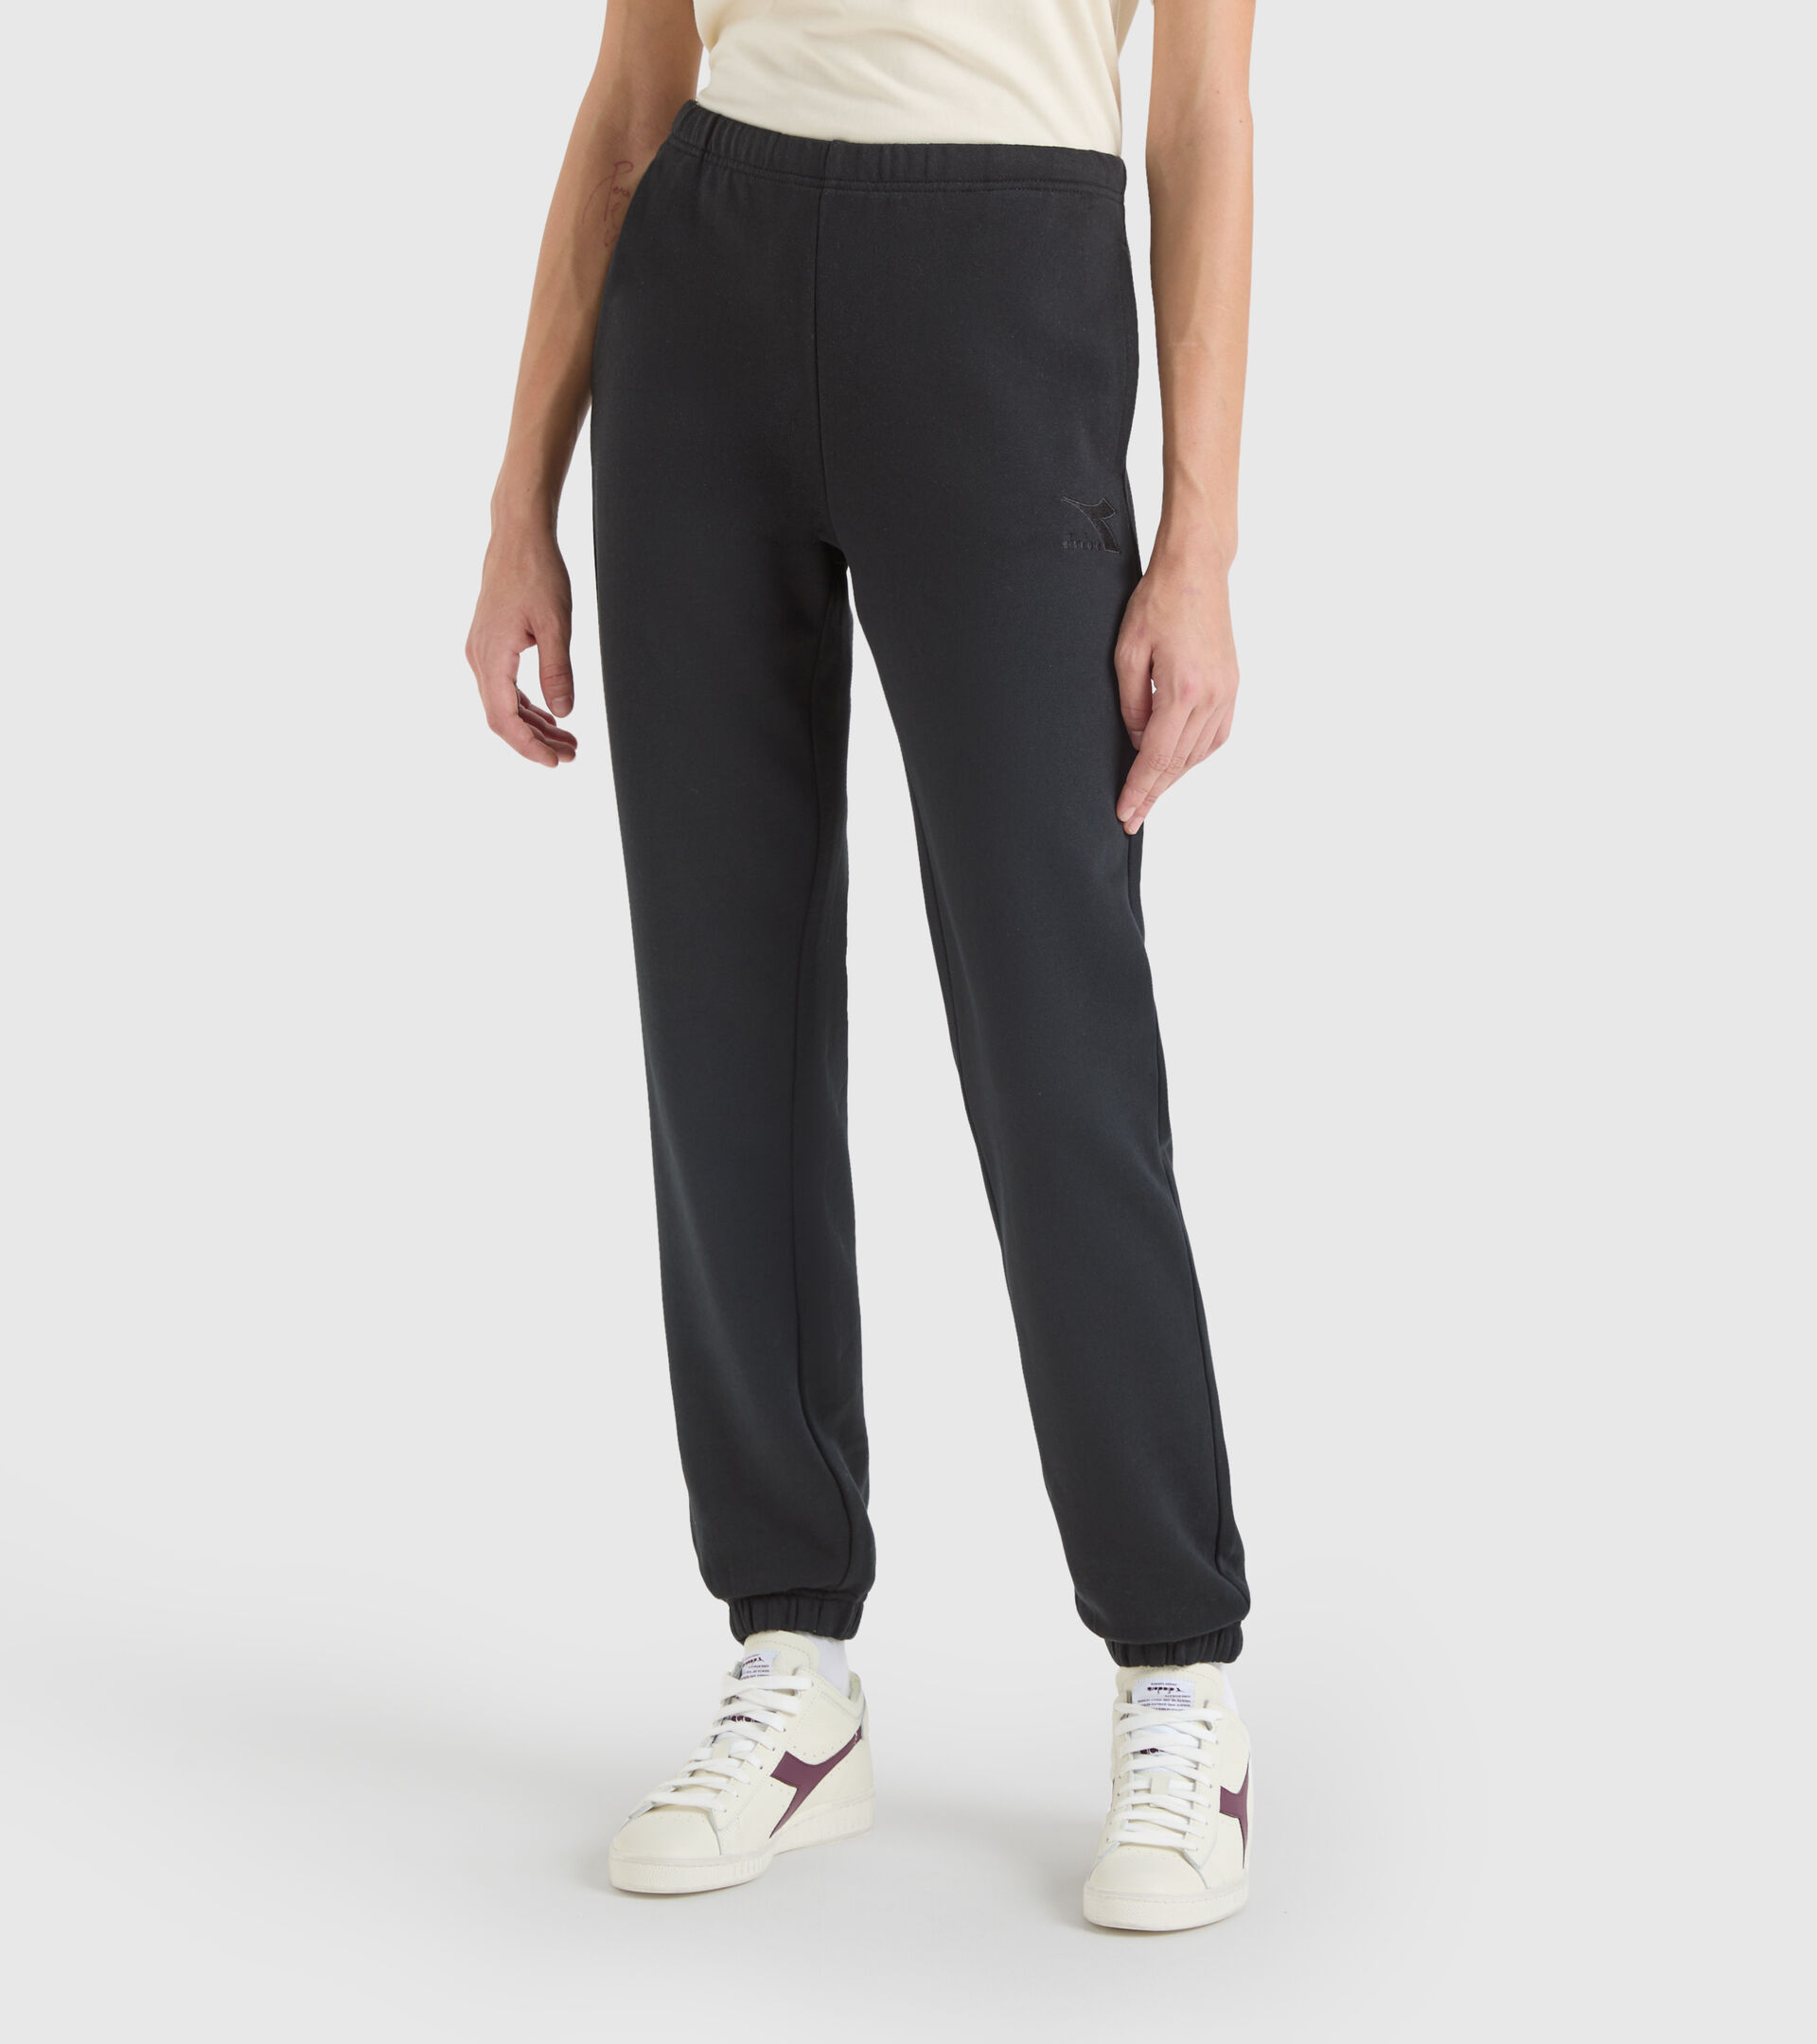 L.PANTS CUFF CORE Sports trousers - Women - Diadora Online Store EG